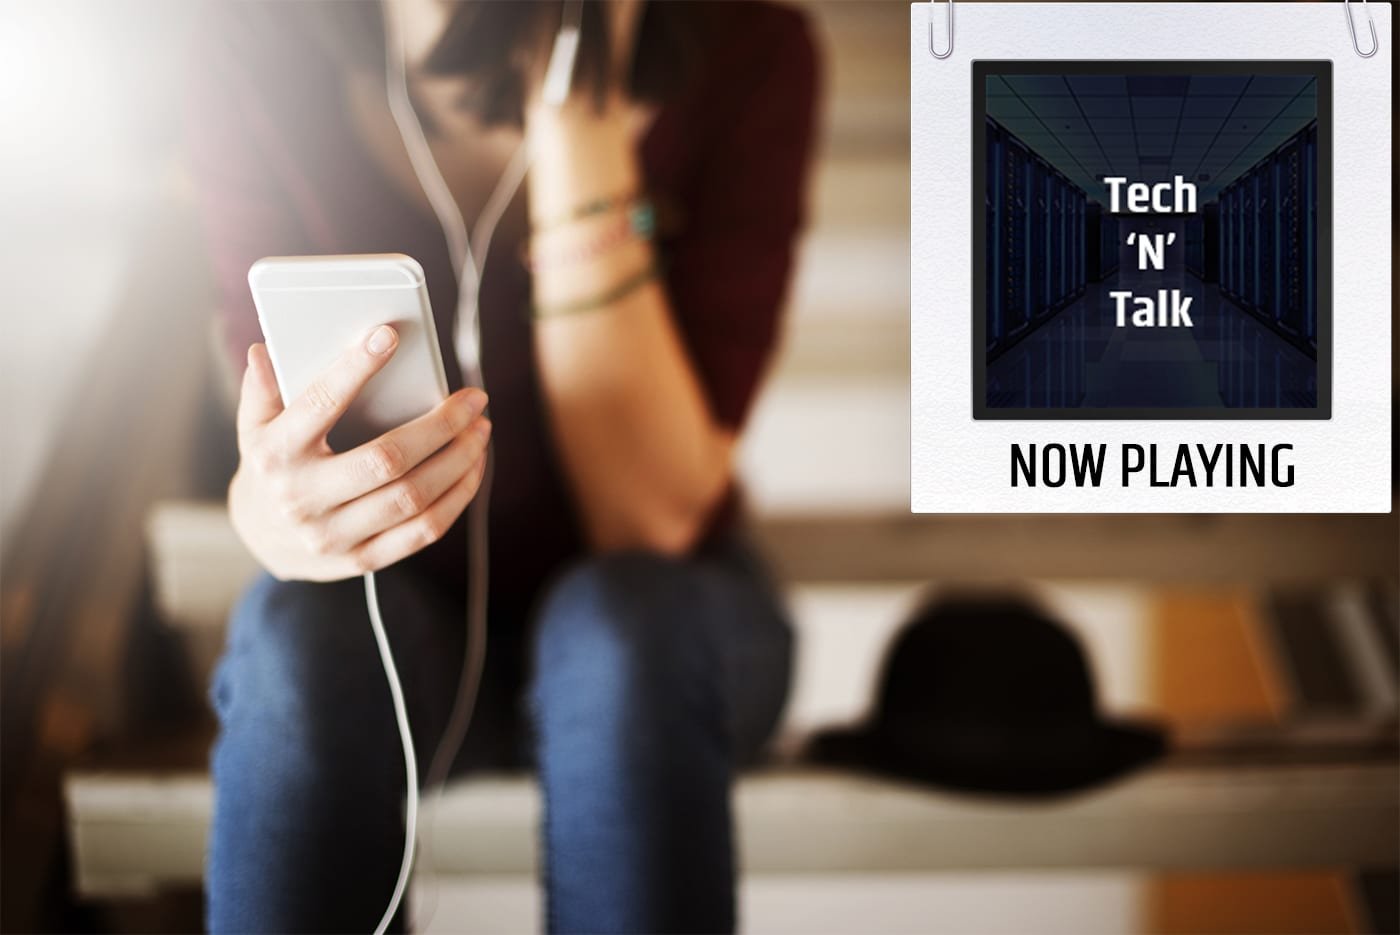 "tech 'n' talk"